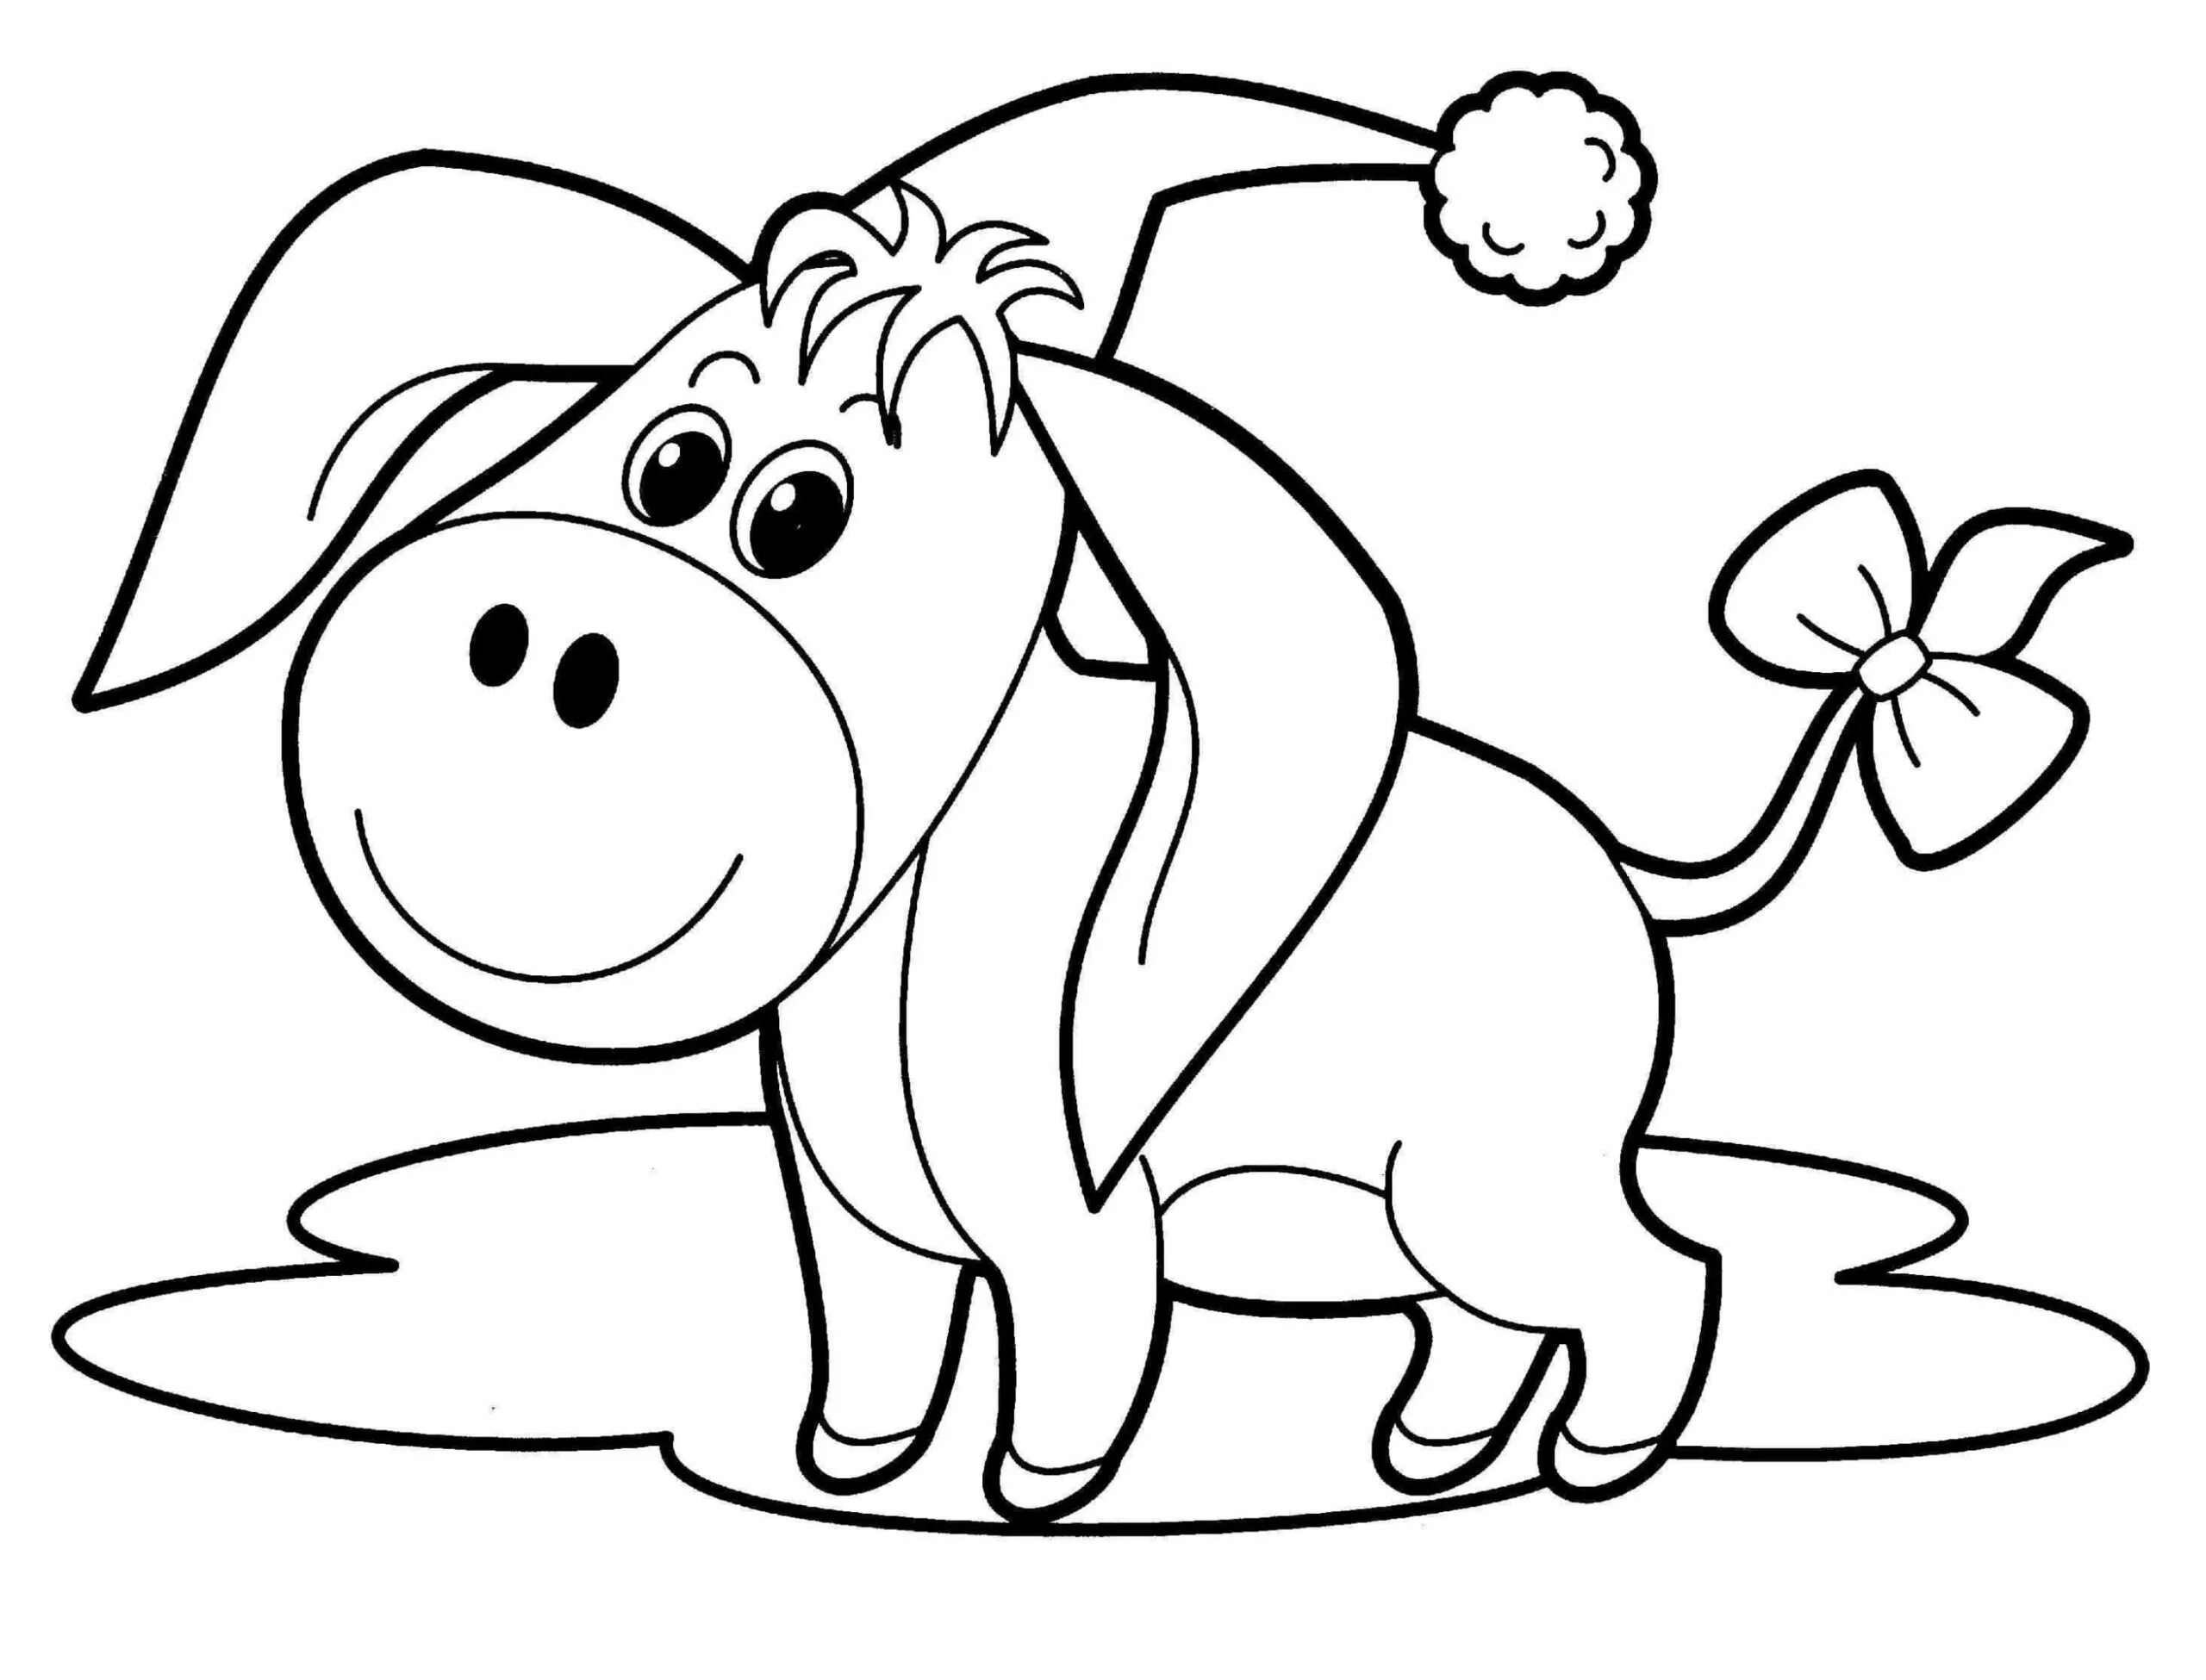 Animal drawings for kids #15